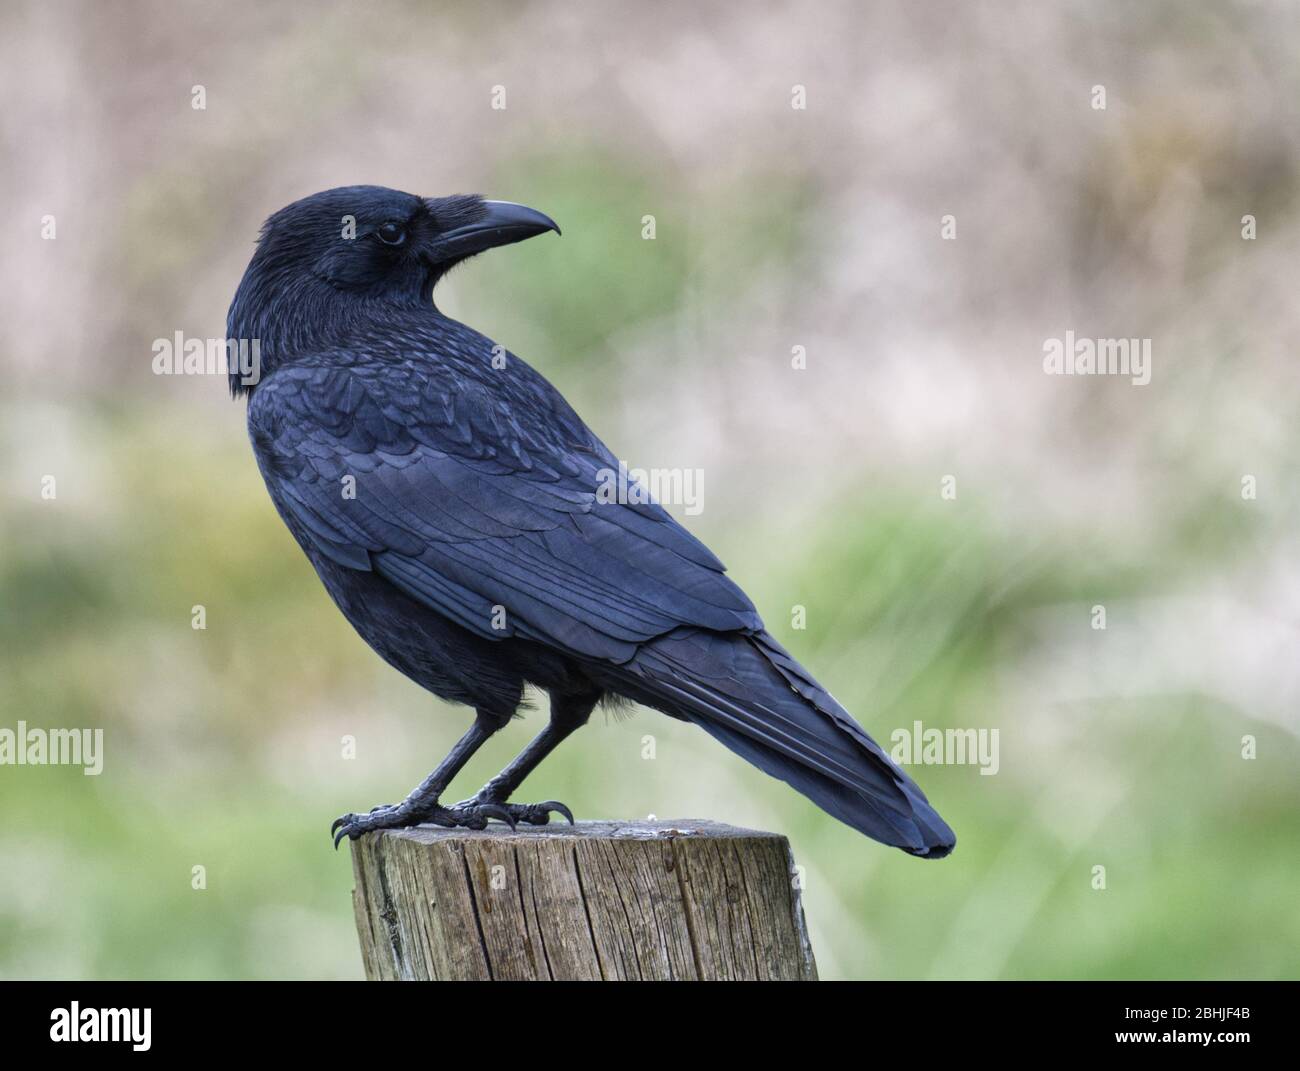 Carrion crow Stock Photo